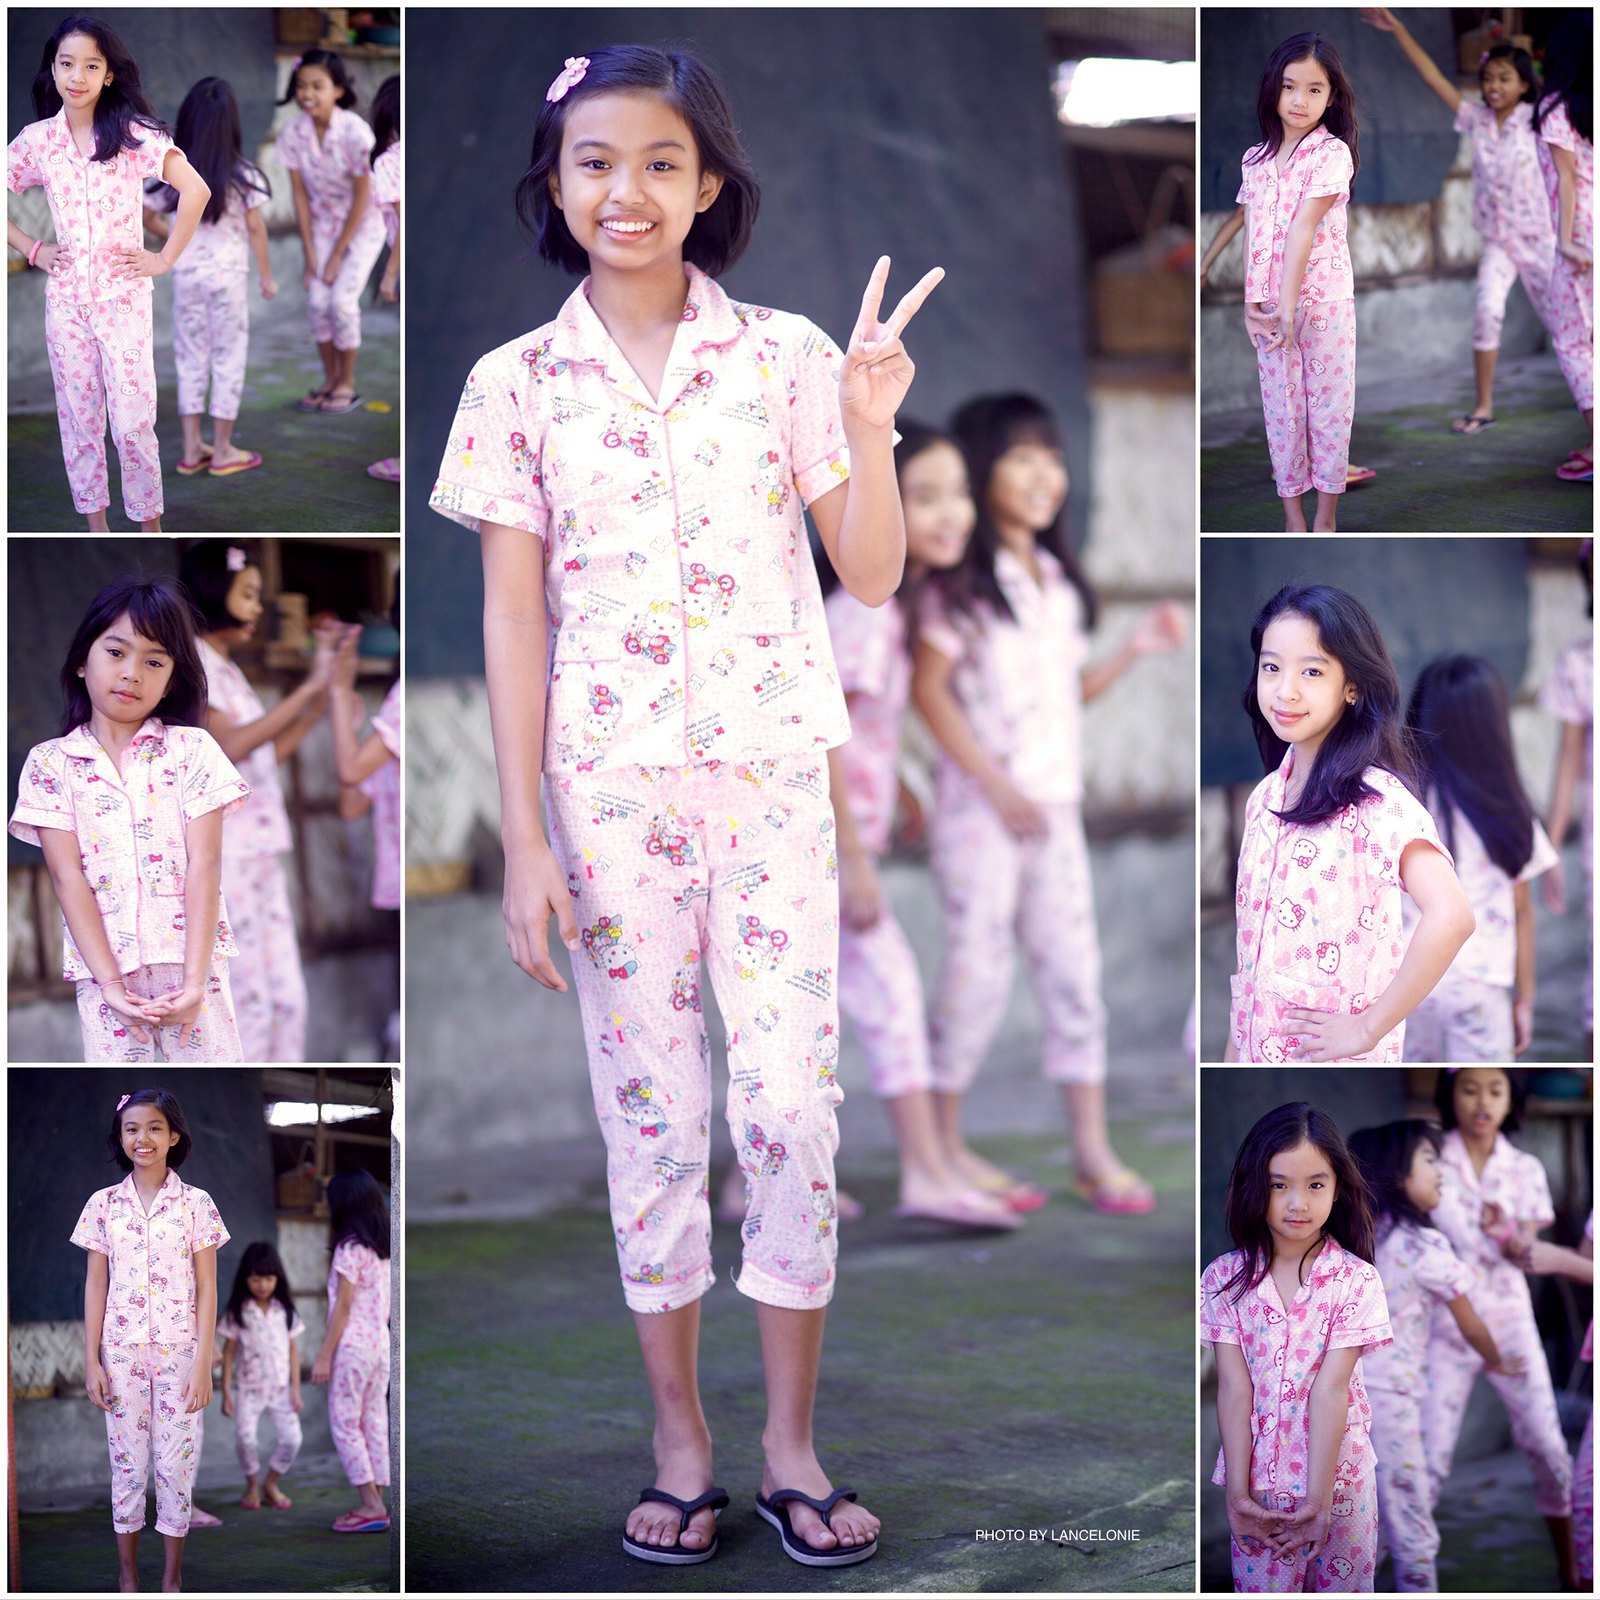 Pia's Pink Pajama Party by lancelonie